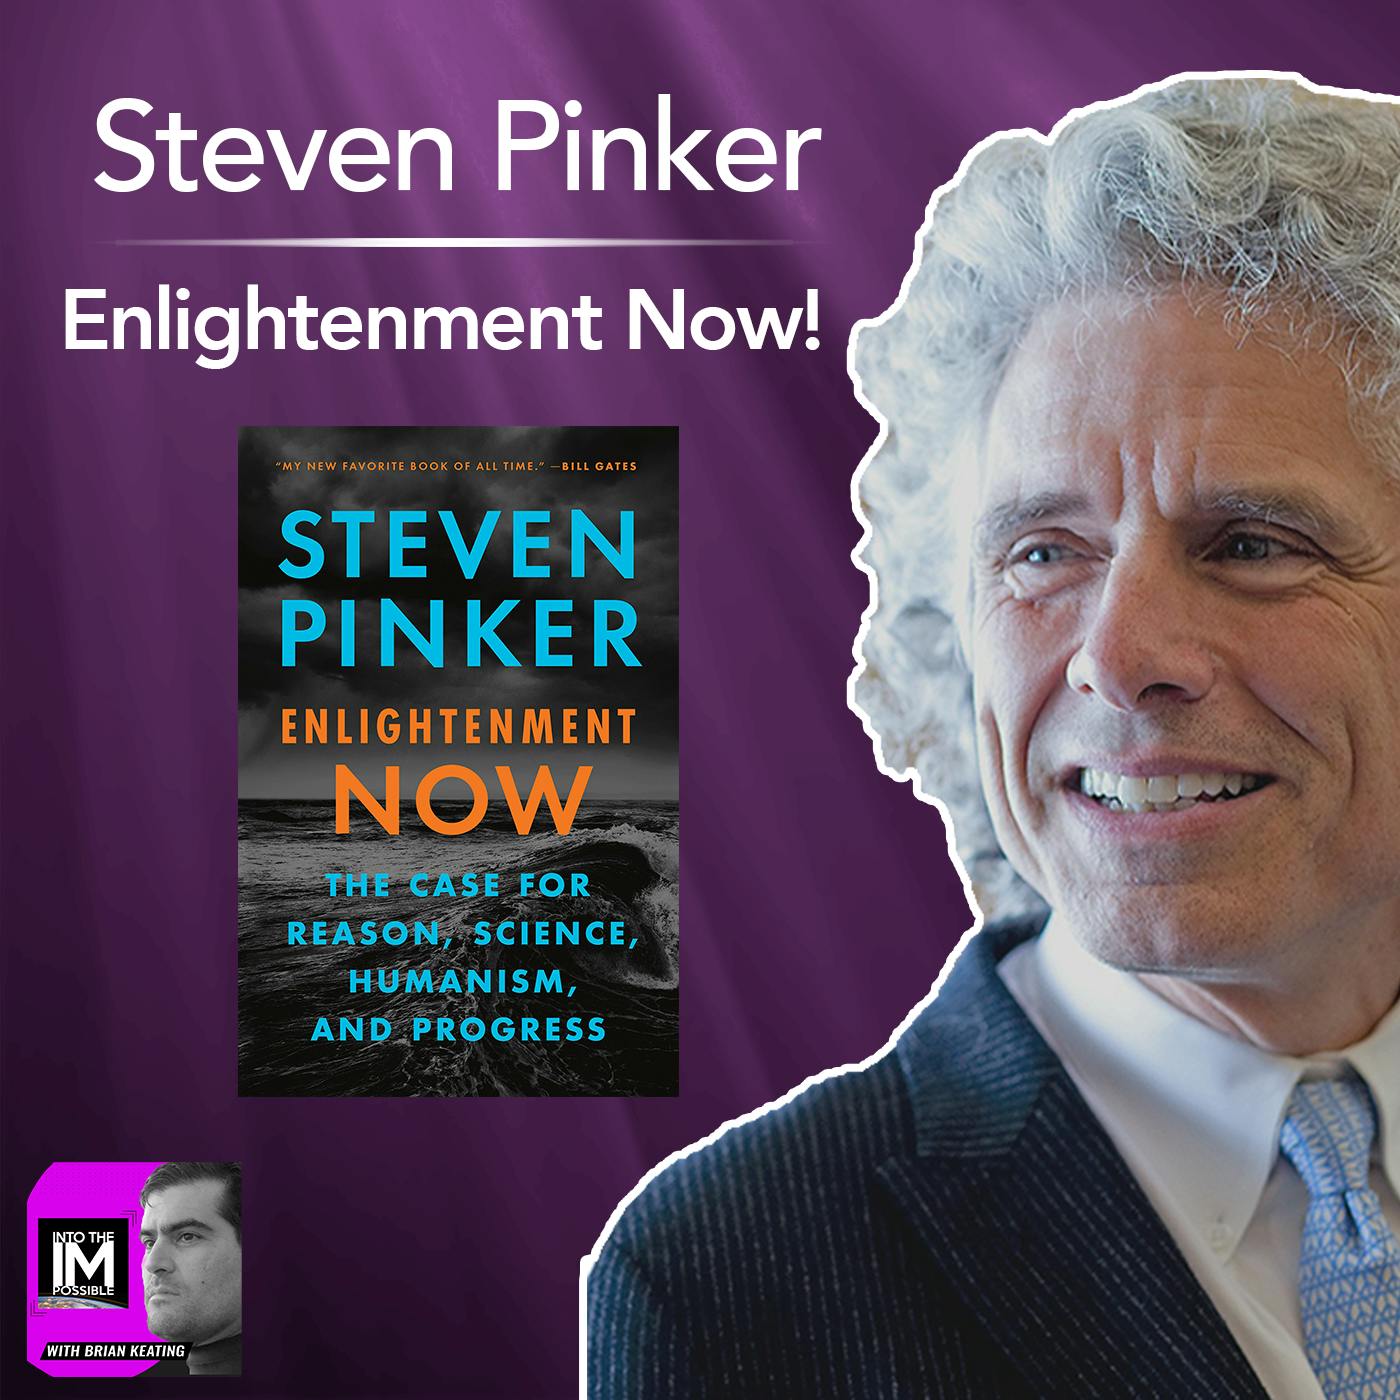 Steven Pinker: Things are Getting BETTER! (#148)